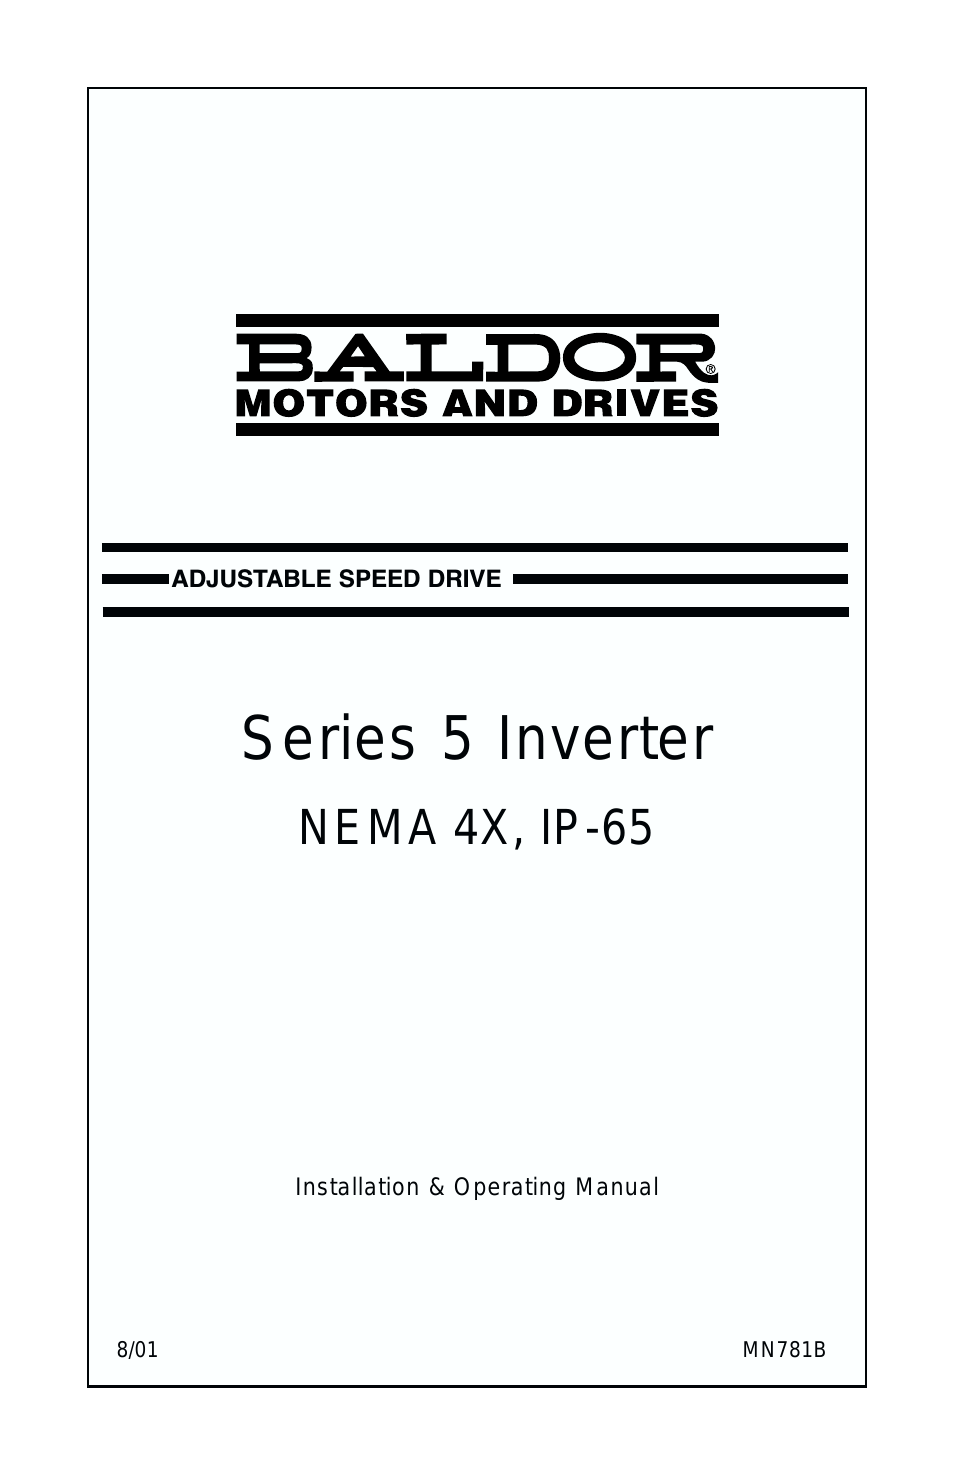 Series 5 Inverter NEMA 4X